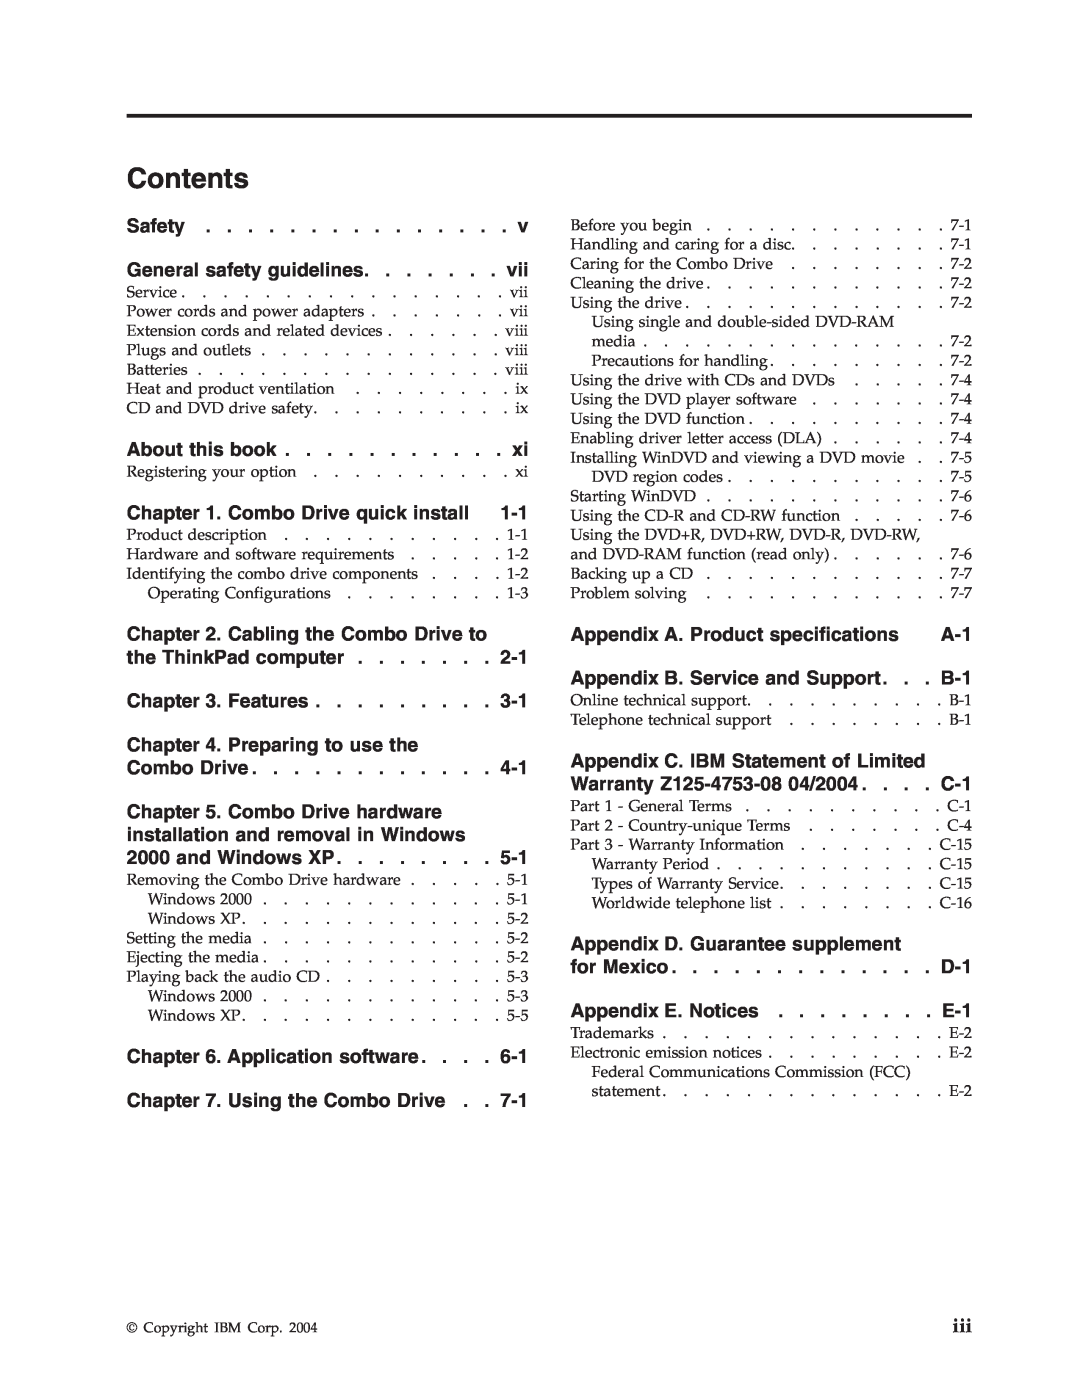 IBM 73P4518 manual Contents 